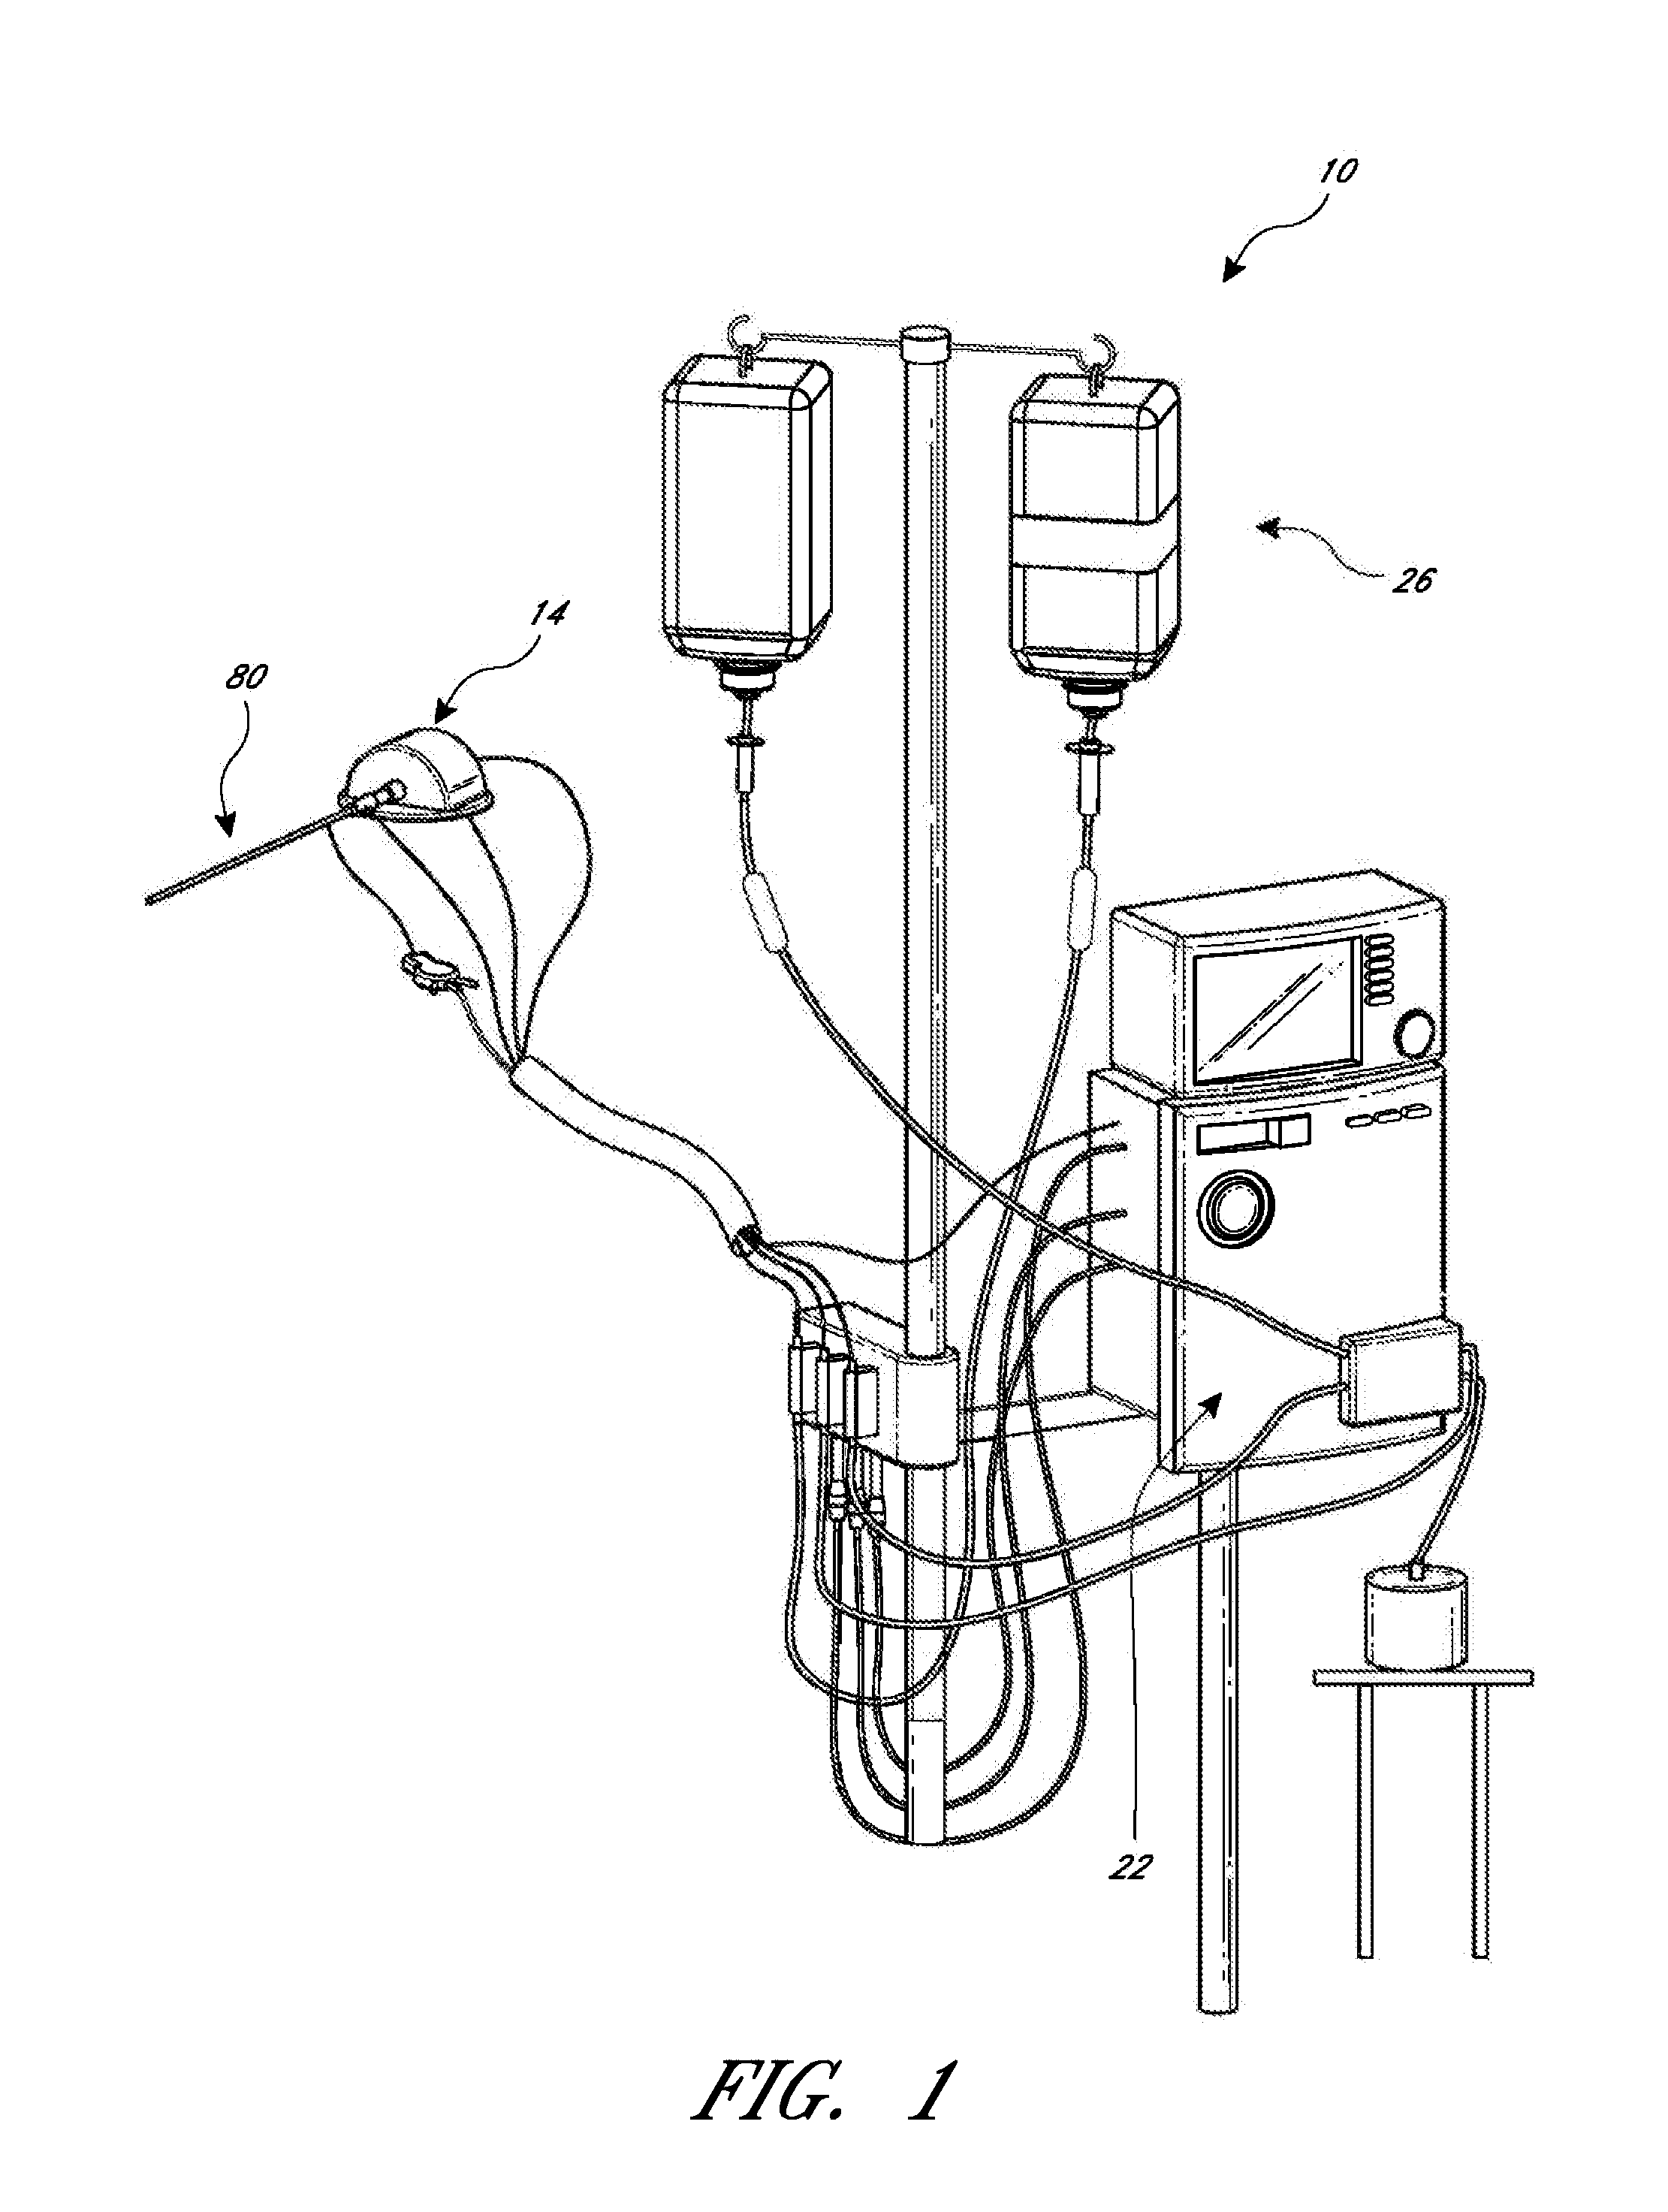 Motor assembly for catheter pump